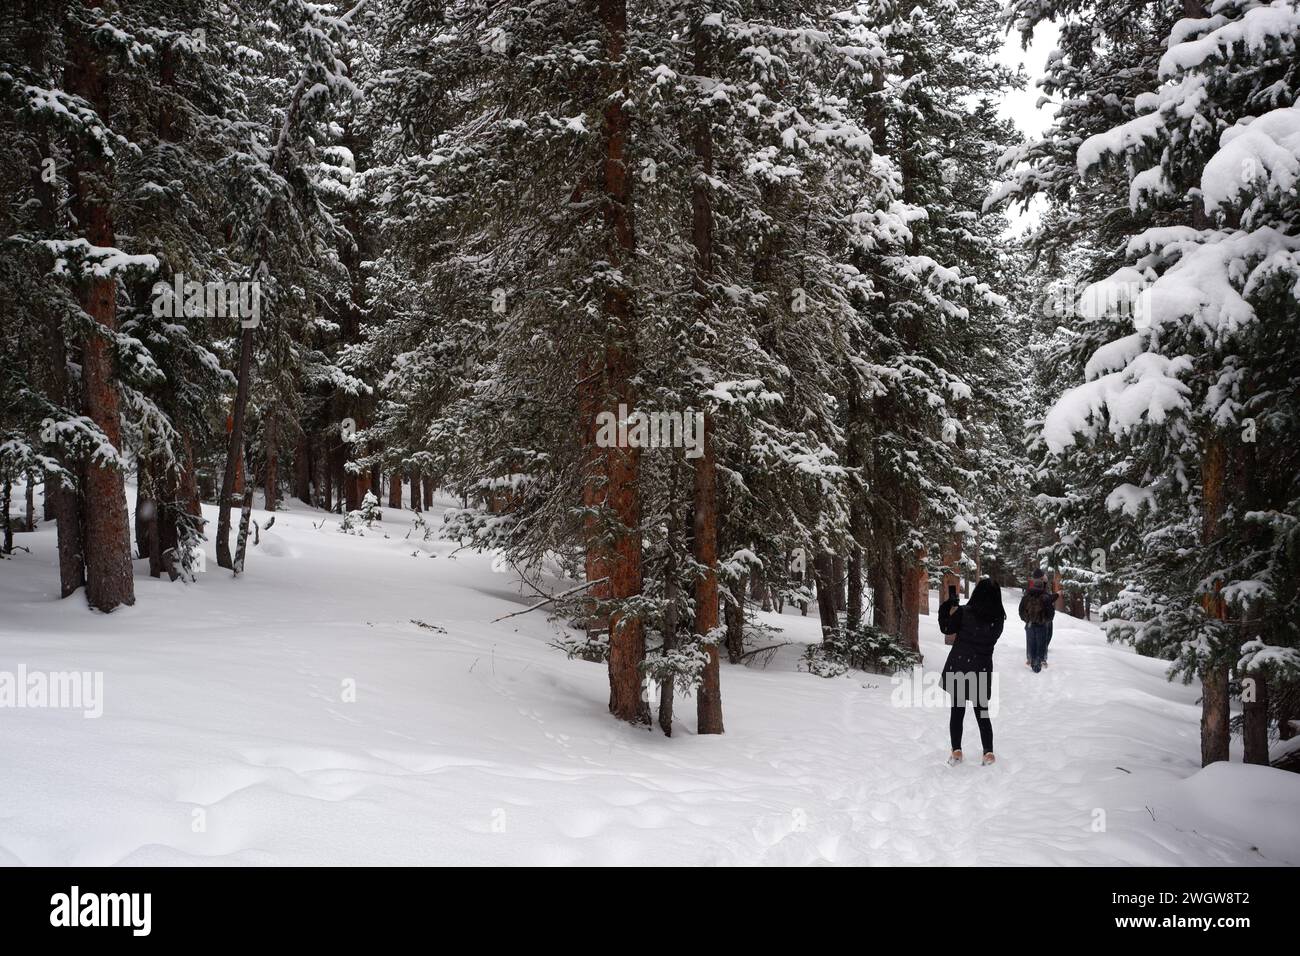 Foto des Waldes mit subalpinen Tannen, Limber-Kiefern und Borstlecone-Kiefern im Winter am Echo Lake, Idaho Springs in Colorado, USA. Stockfoto